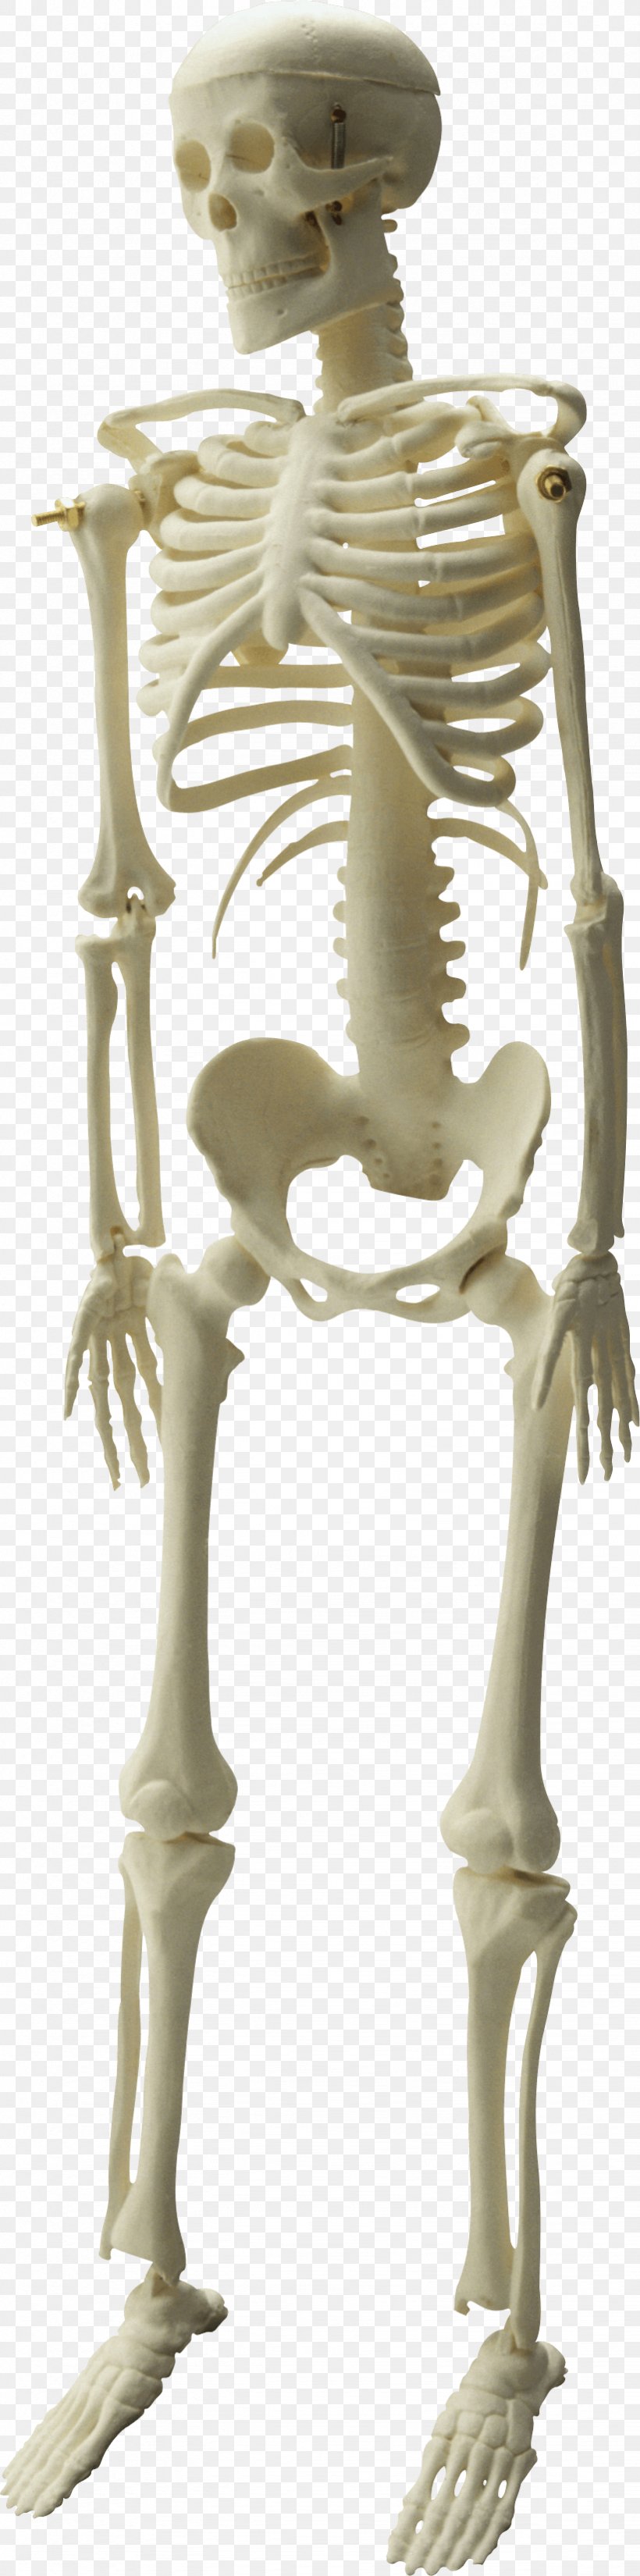 Skeleton Image File Formats Clip Art, PNG, 821x3305px, Skeleton, Figurine, Human Skeleton, Image File Formats, Joint Download Free